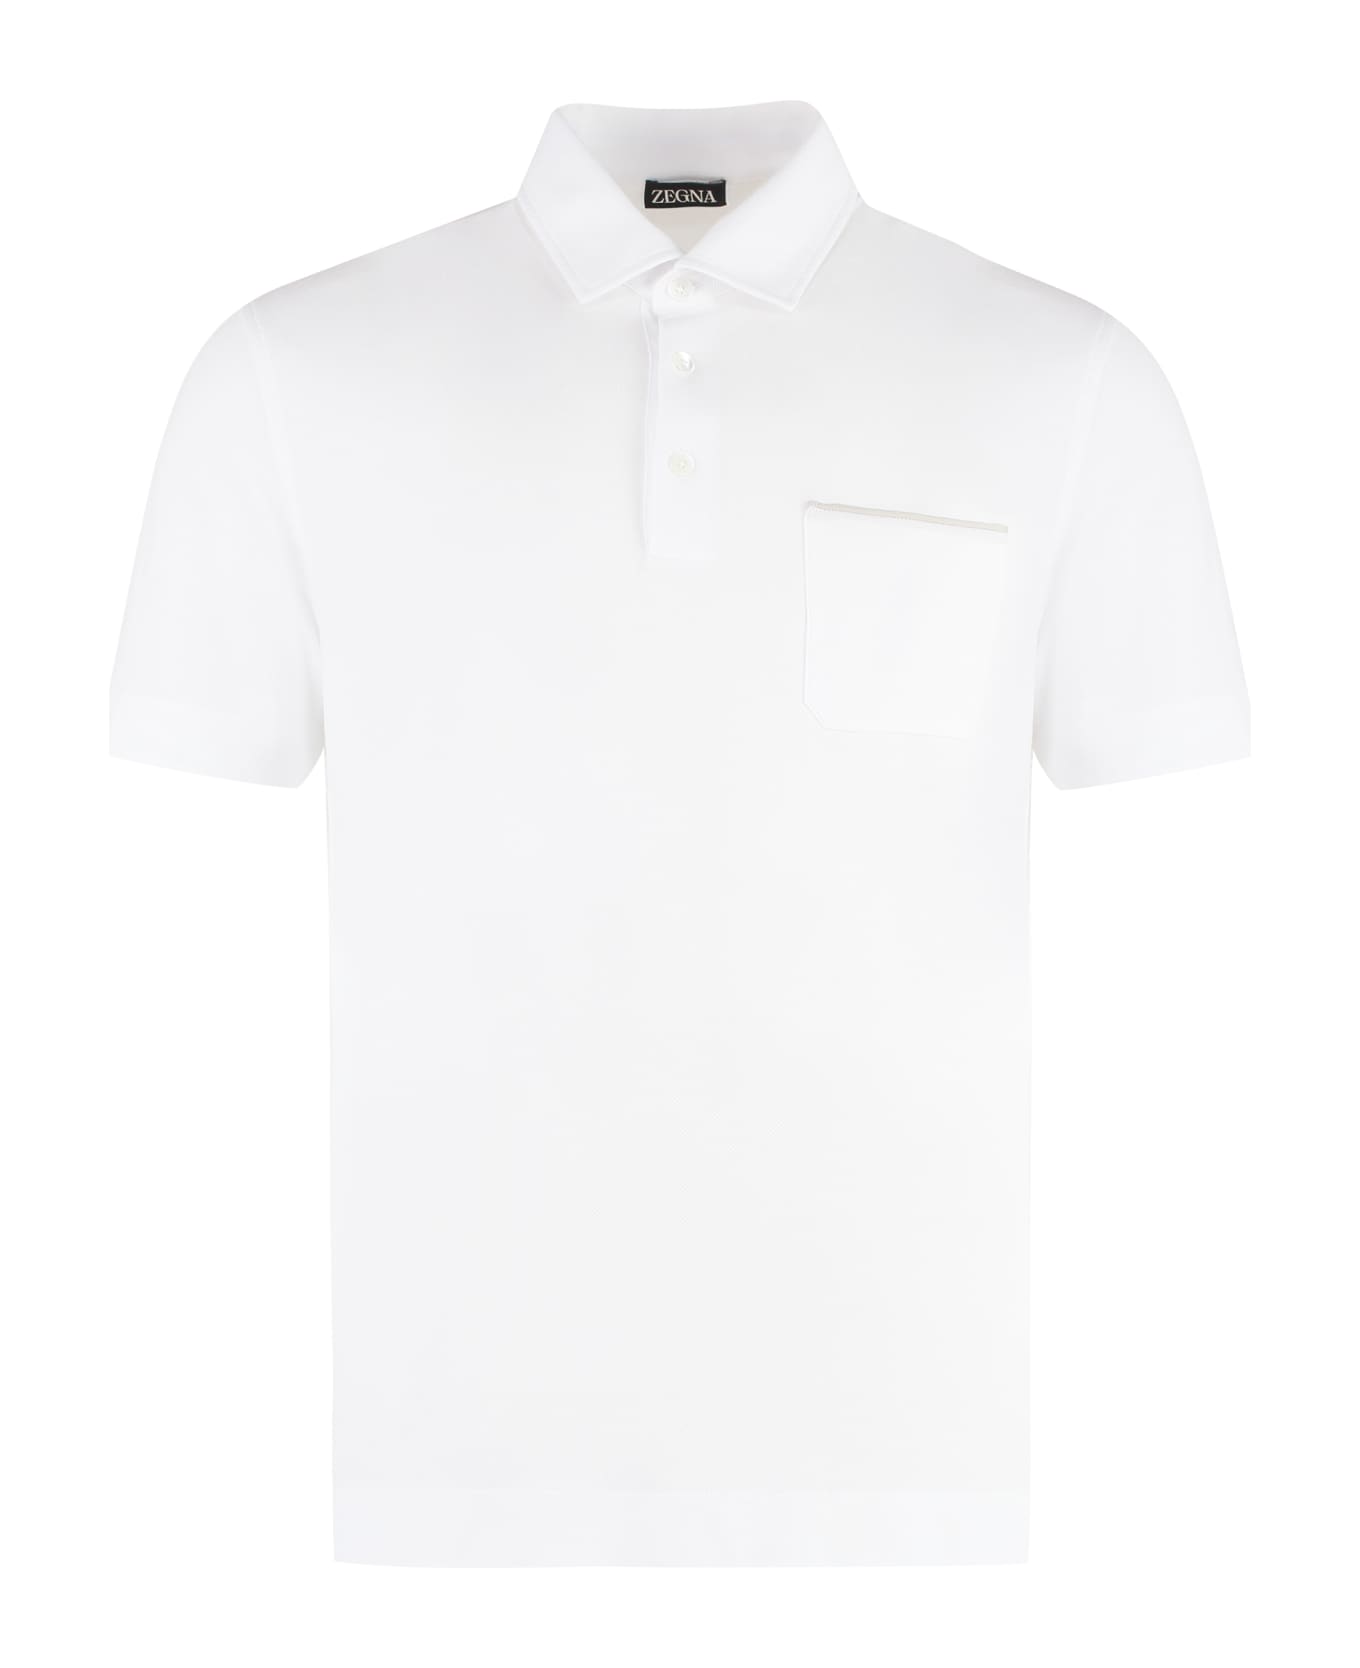 Zegna Short Sleeve Cotton Pique Polo Shirt - White ポロシャツ